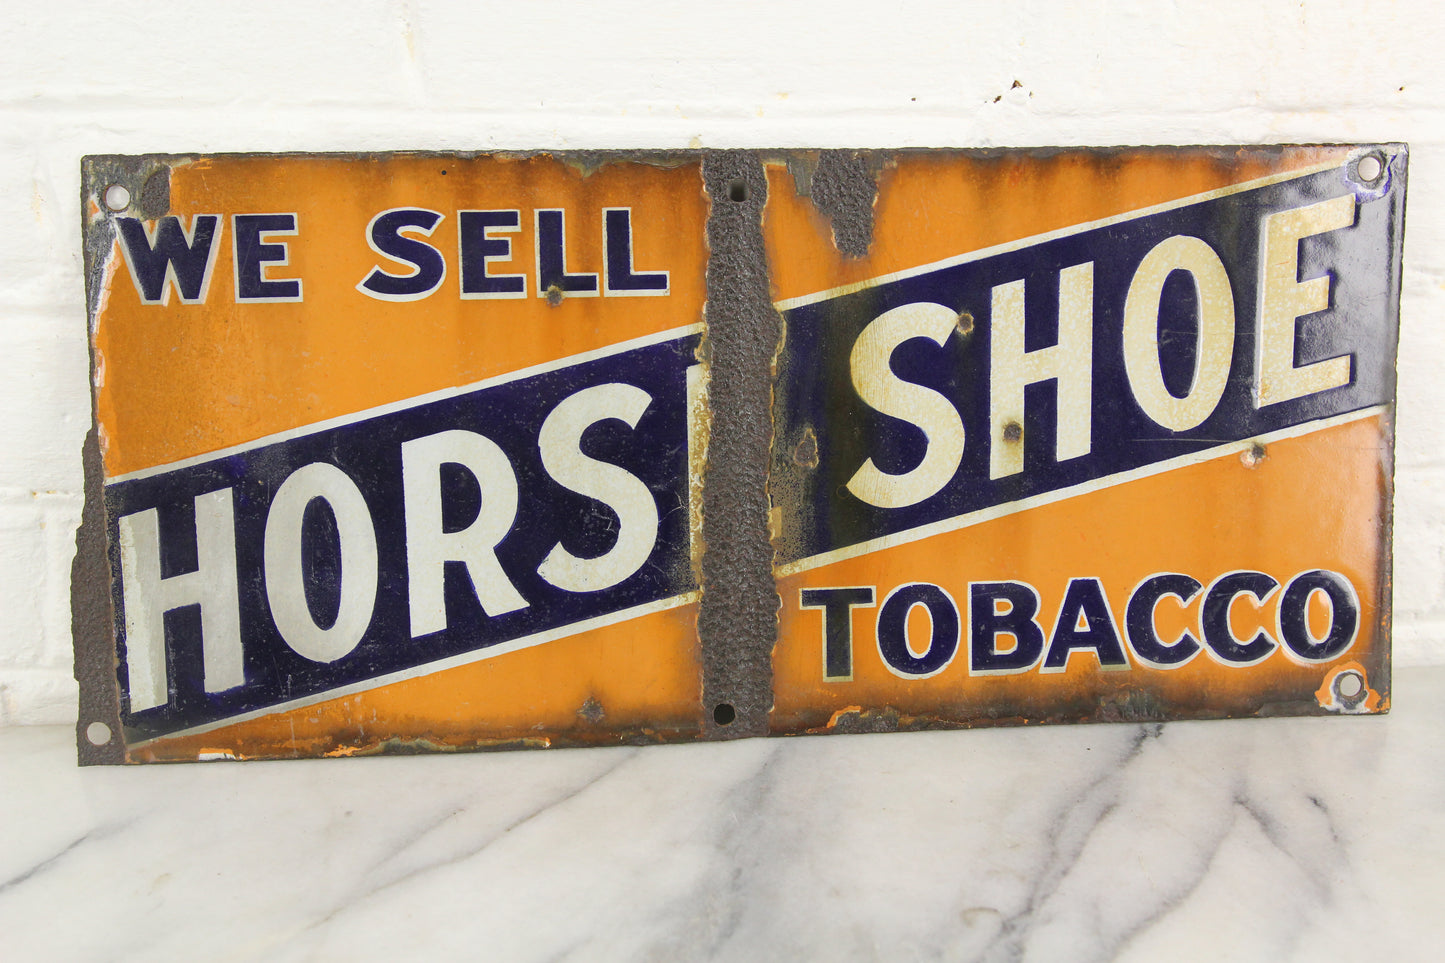 We Sell Horse Shoe Tobacco Double Sided Antique Porcelain Flange Sign (Missing Flange)